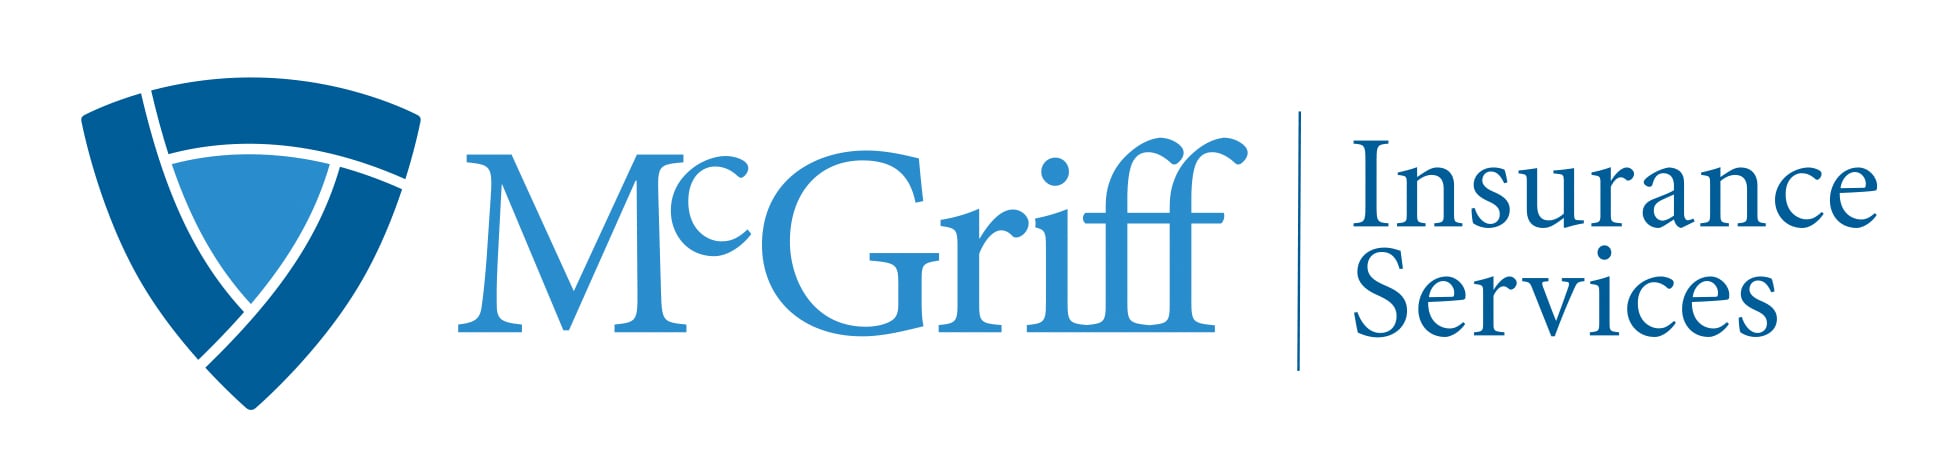 McGriff Insurance Services logo